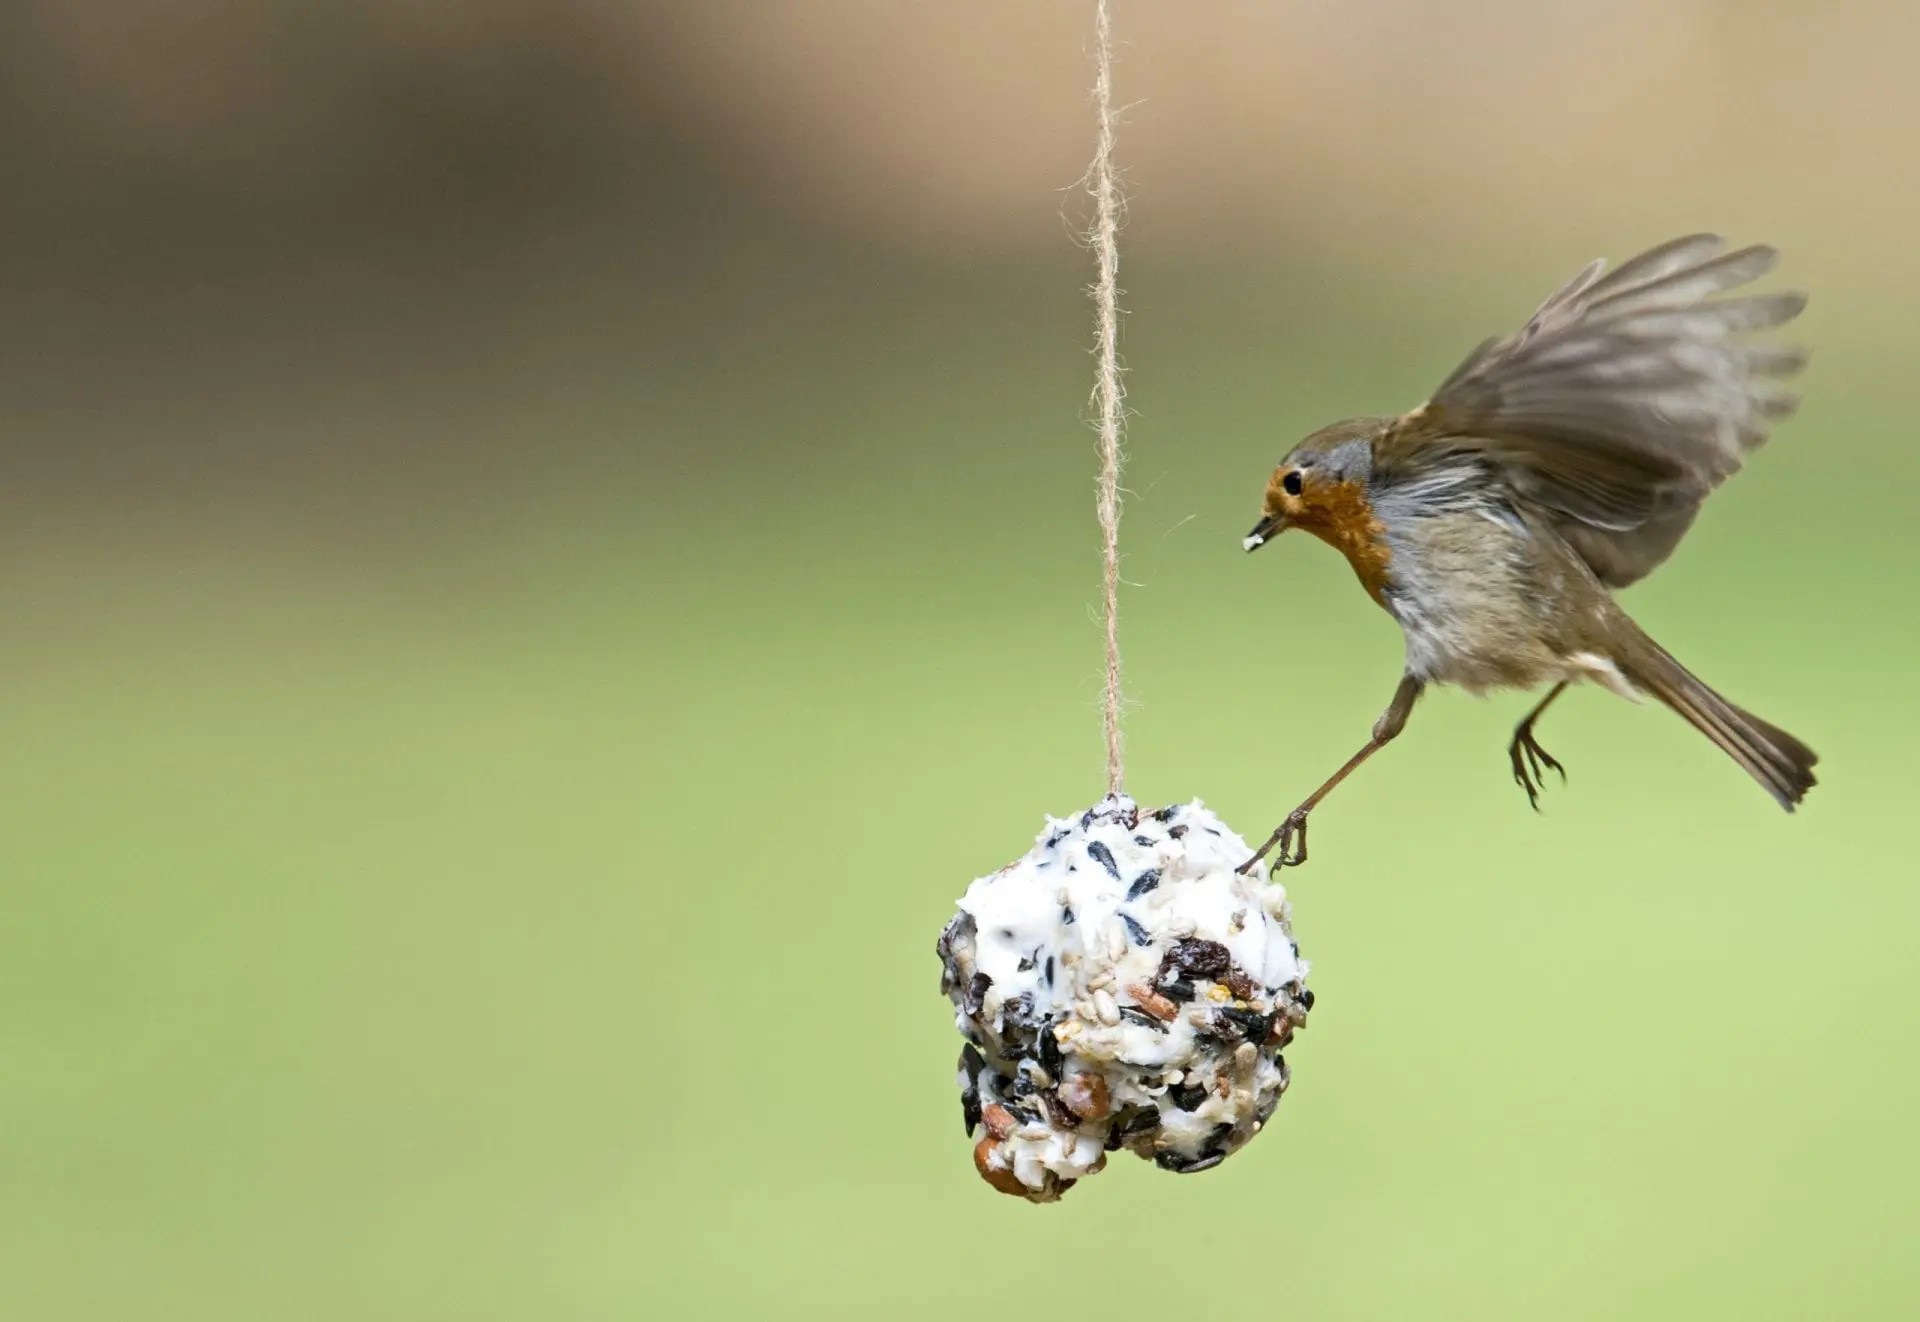 How To Make A Bird Seed Ball